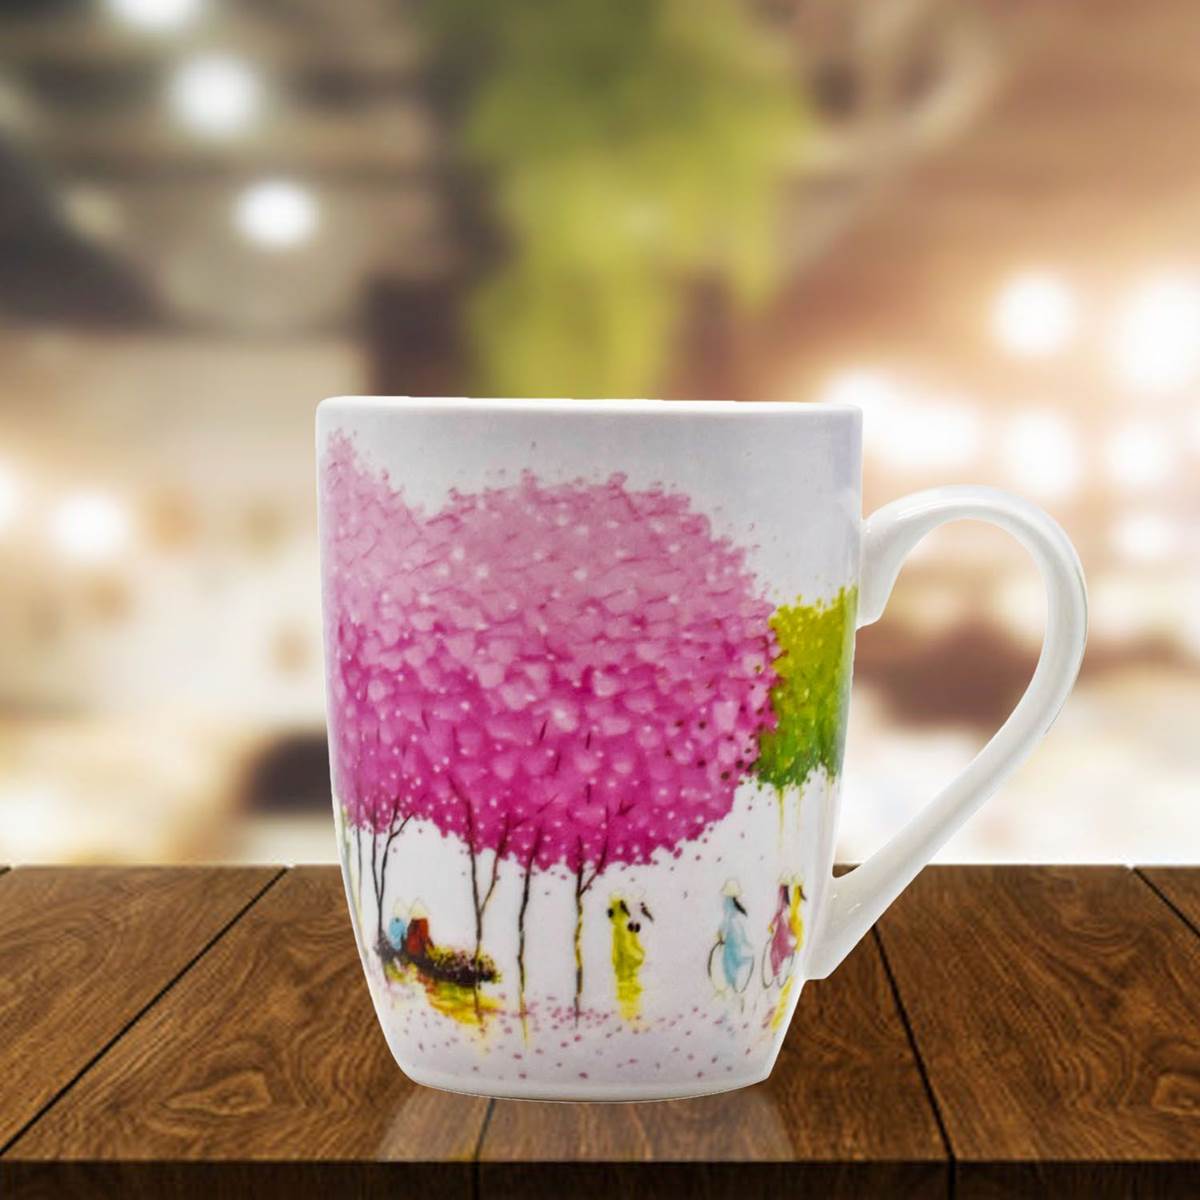 Printed Ceramic Coffee or Tea Mug with handle - 325ml (BPM2633-A)